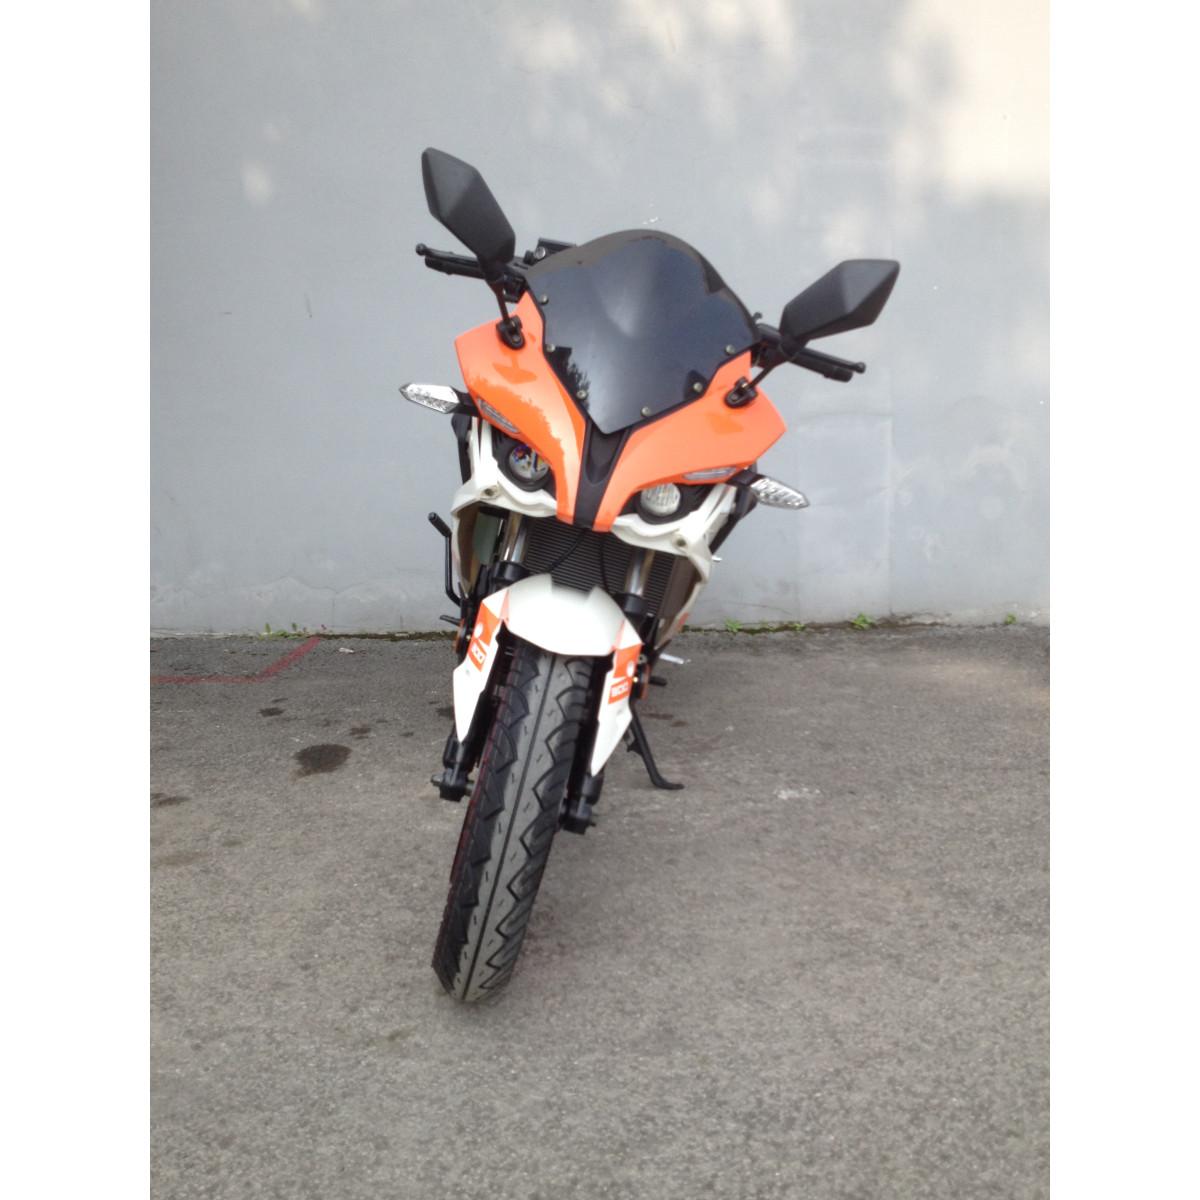 Мотоцикл FT300-R1 Forte оранжево-белый